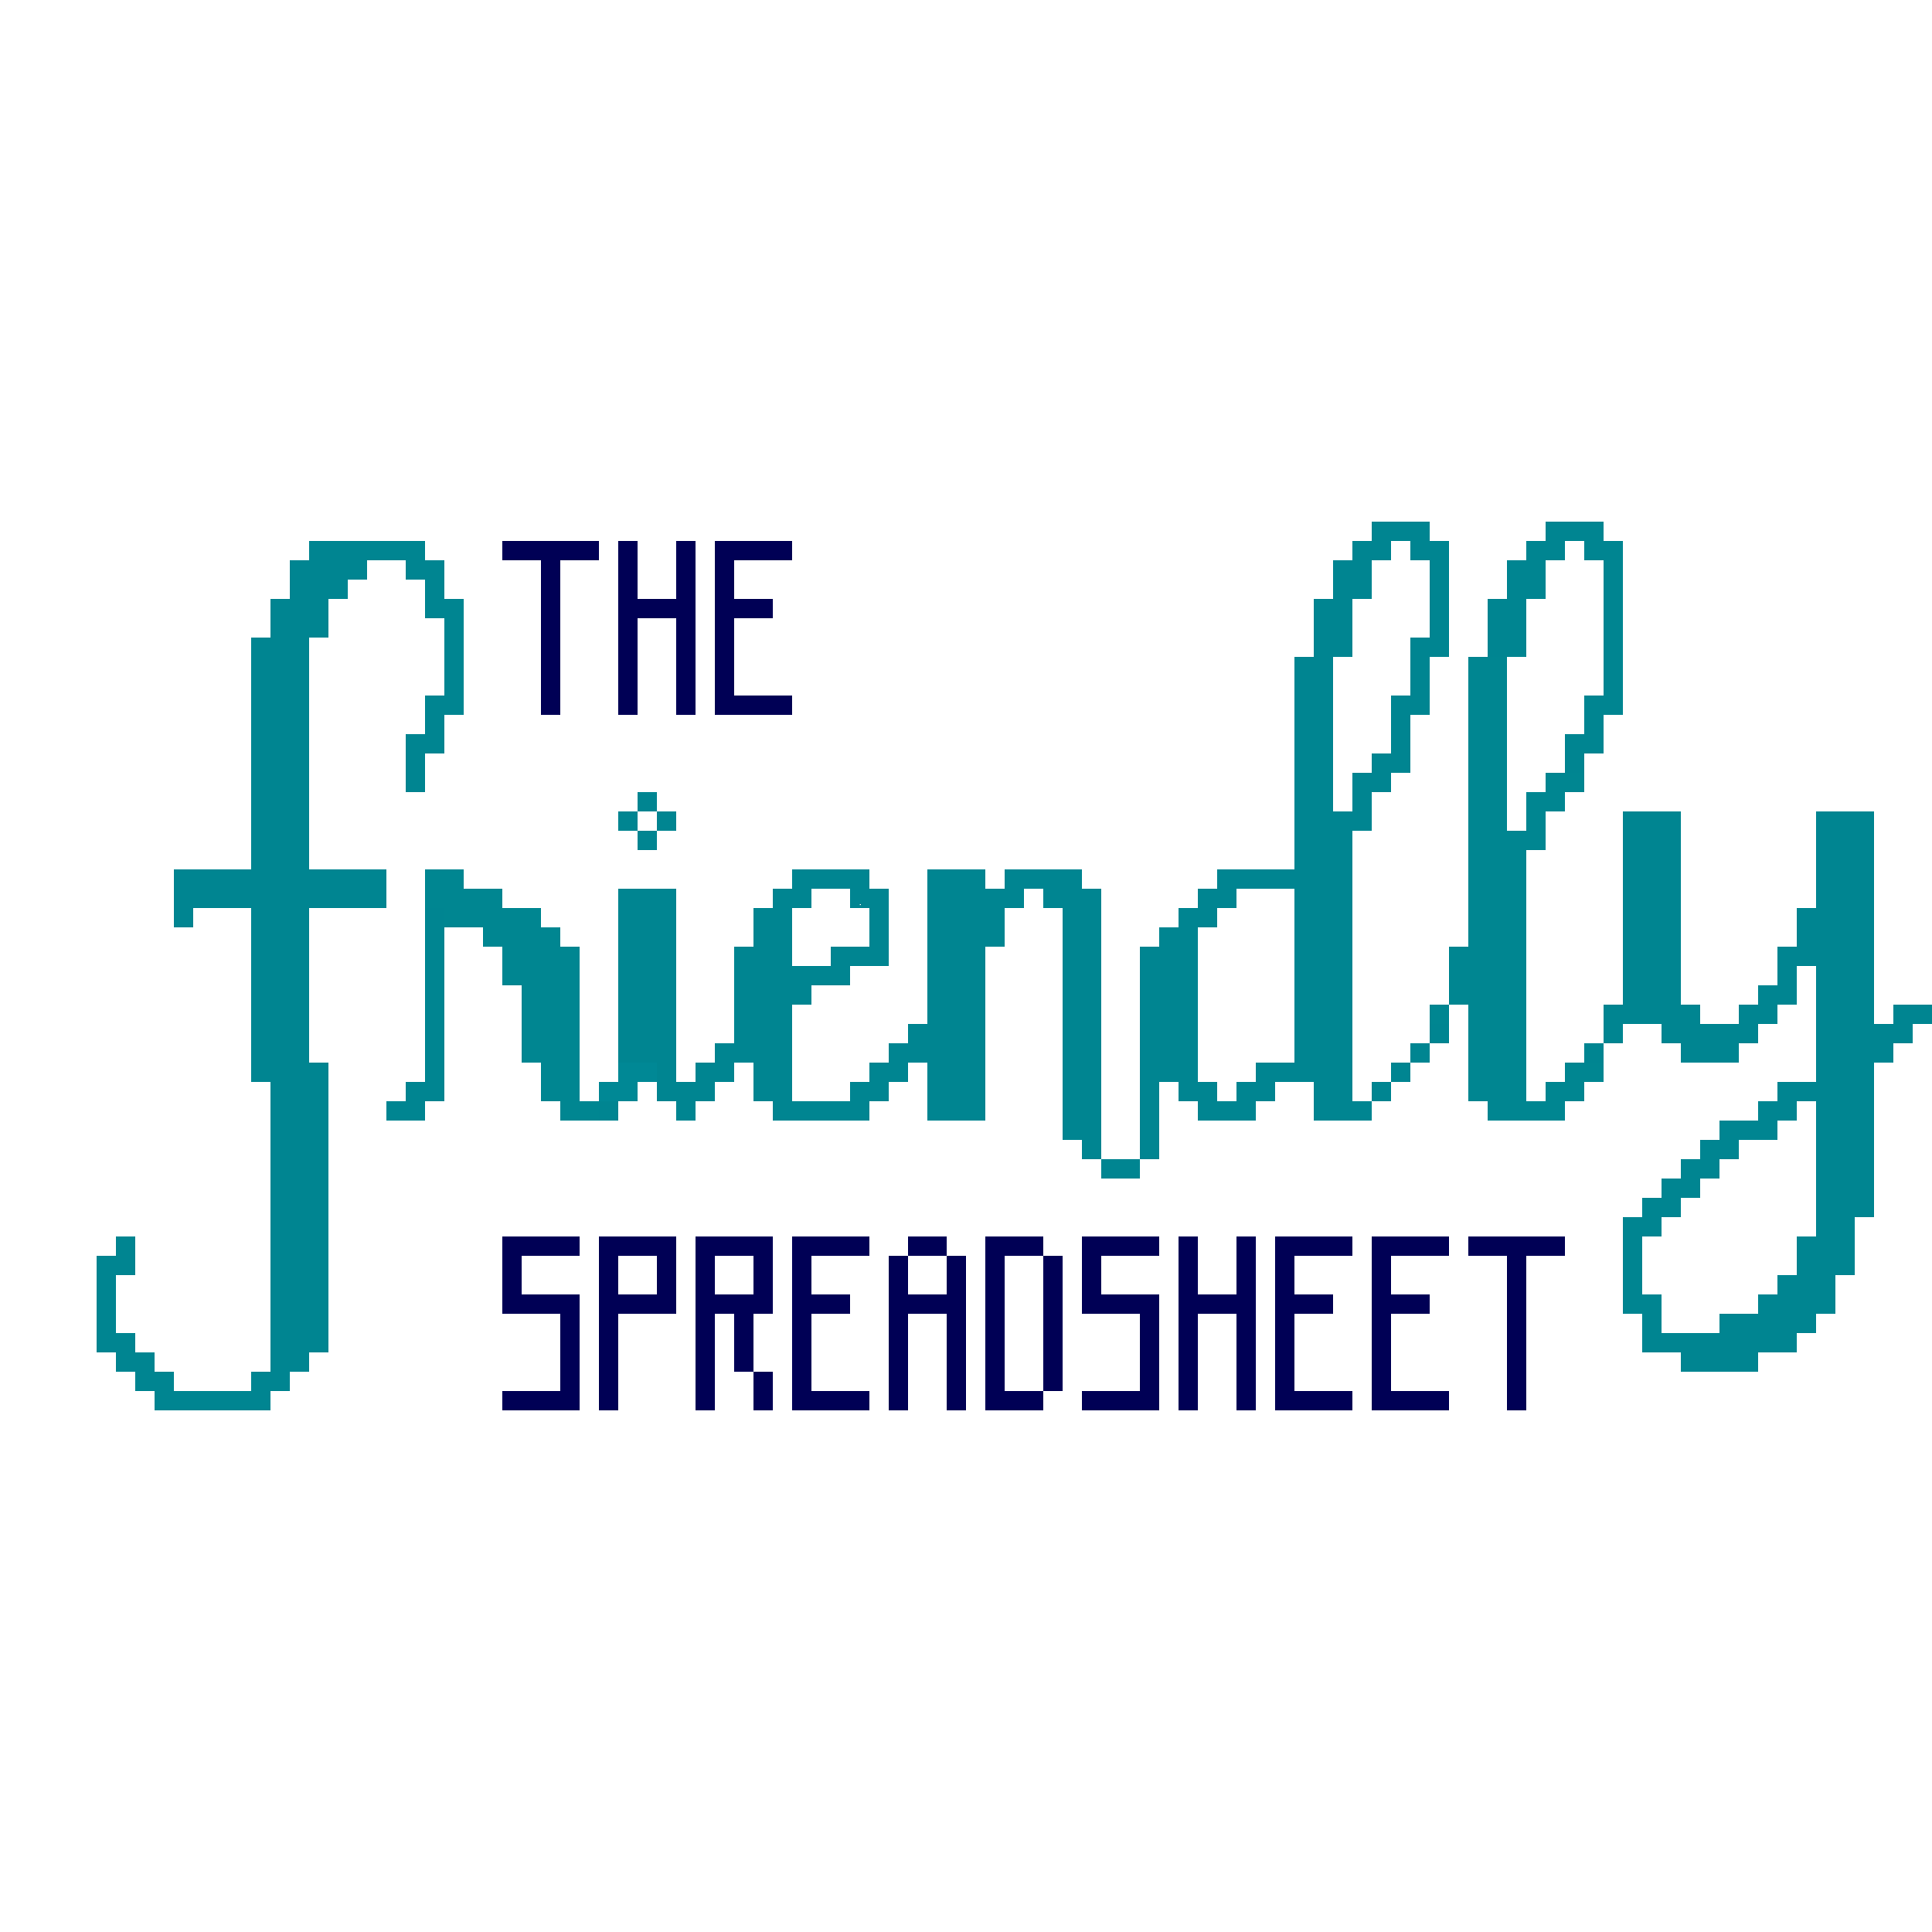 The Friendly Spreadsheet